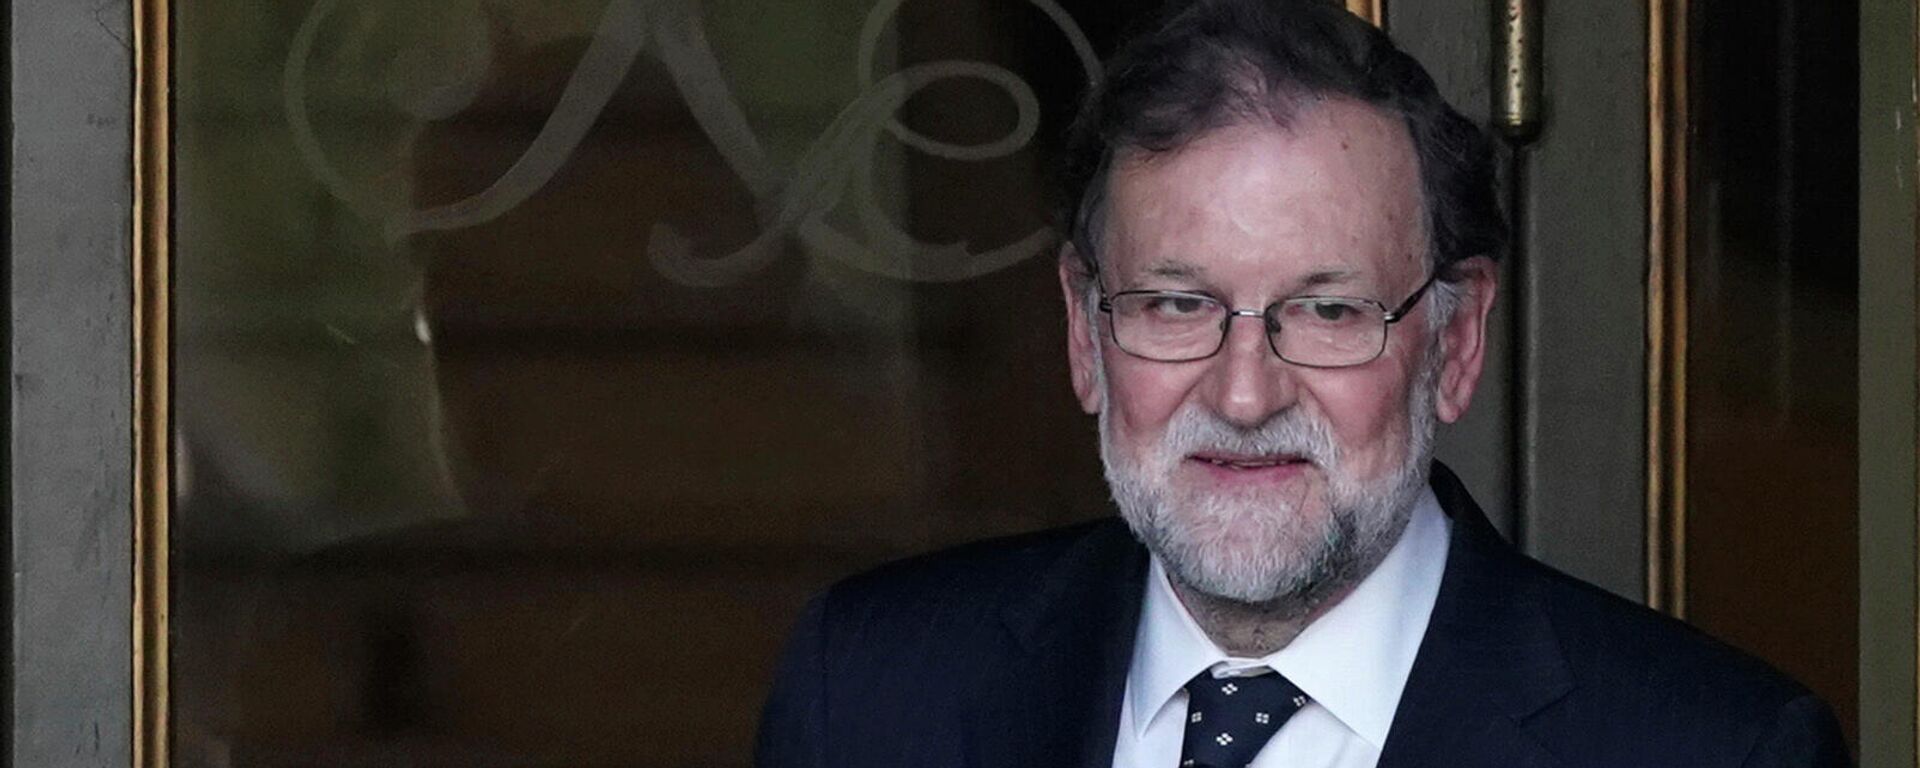 Mariano Rajoy, expresidente del Gobierno español - Sputnik Mundo, 1920, 09.03.2021